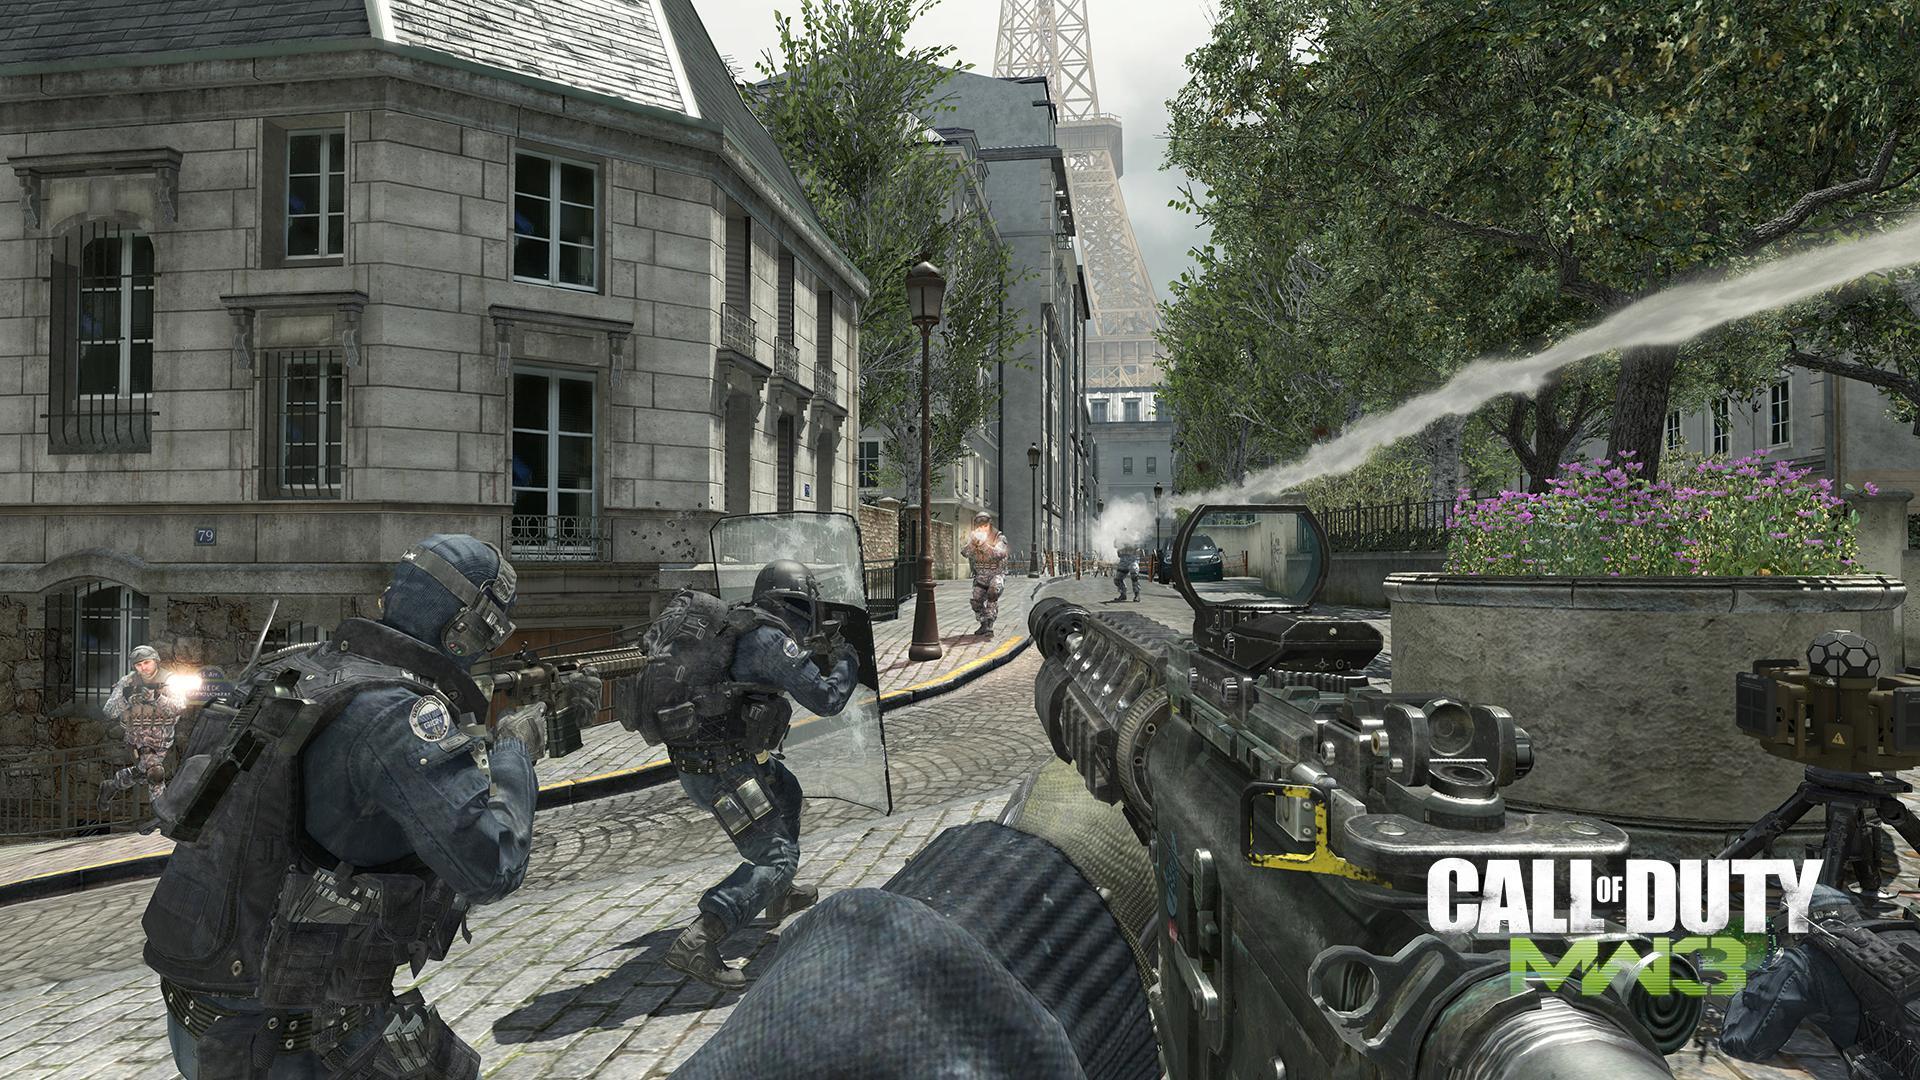 Call Of Duty: Modern Warfare 3 Wallpapers - Wallpaper Cave1920 x 1080